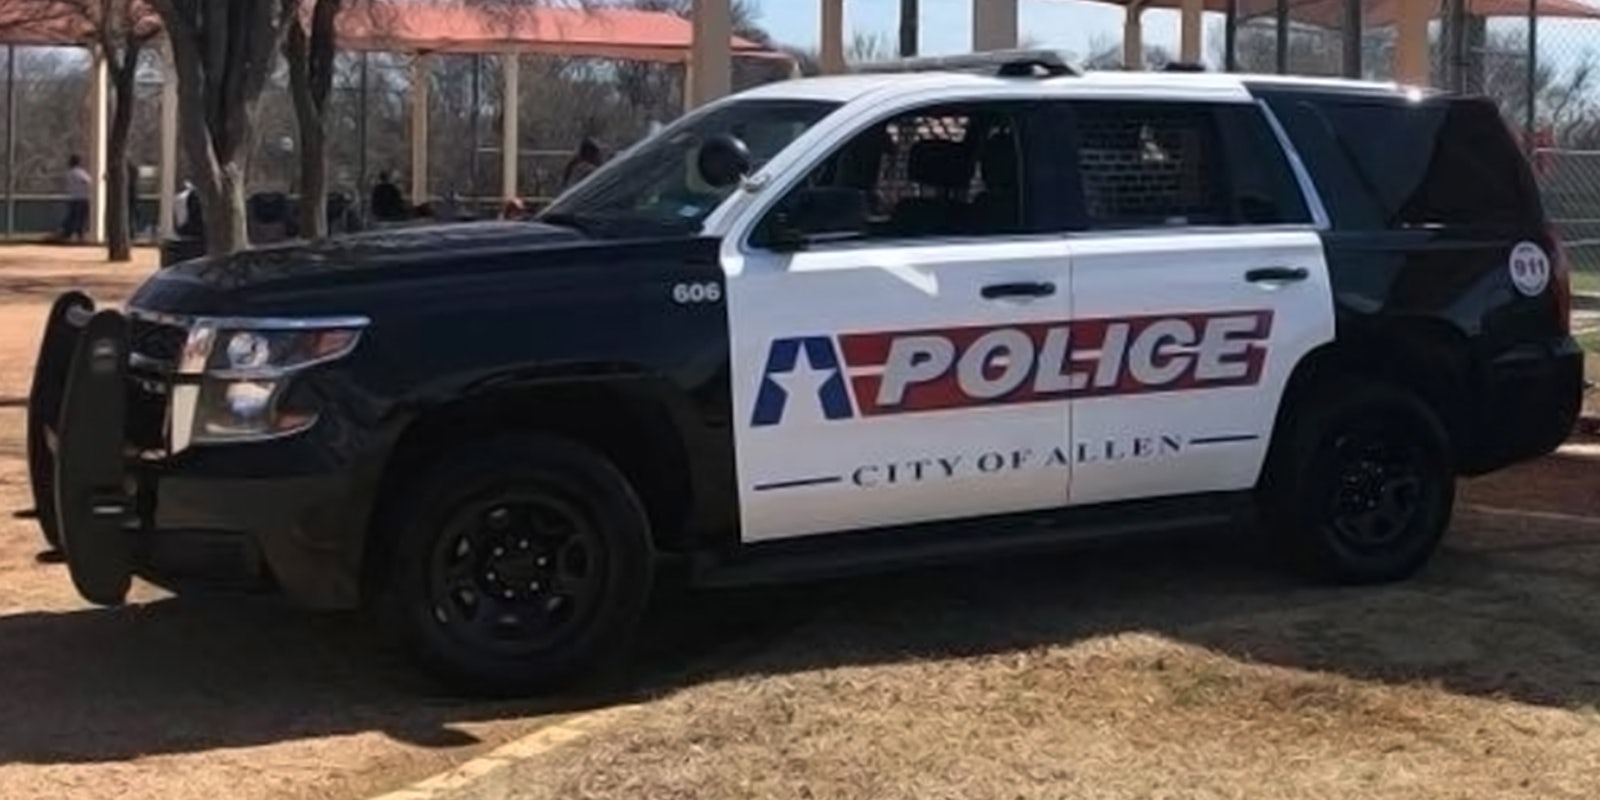 City of Allen Police car